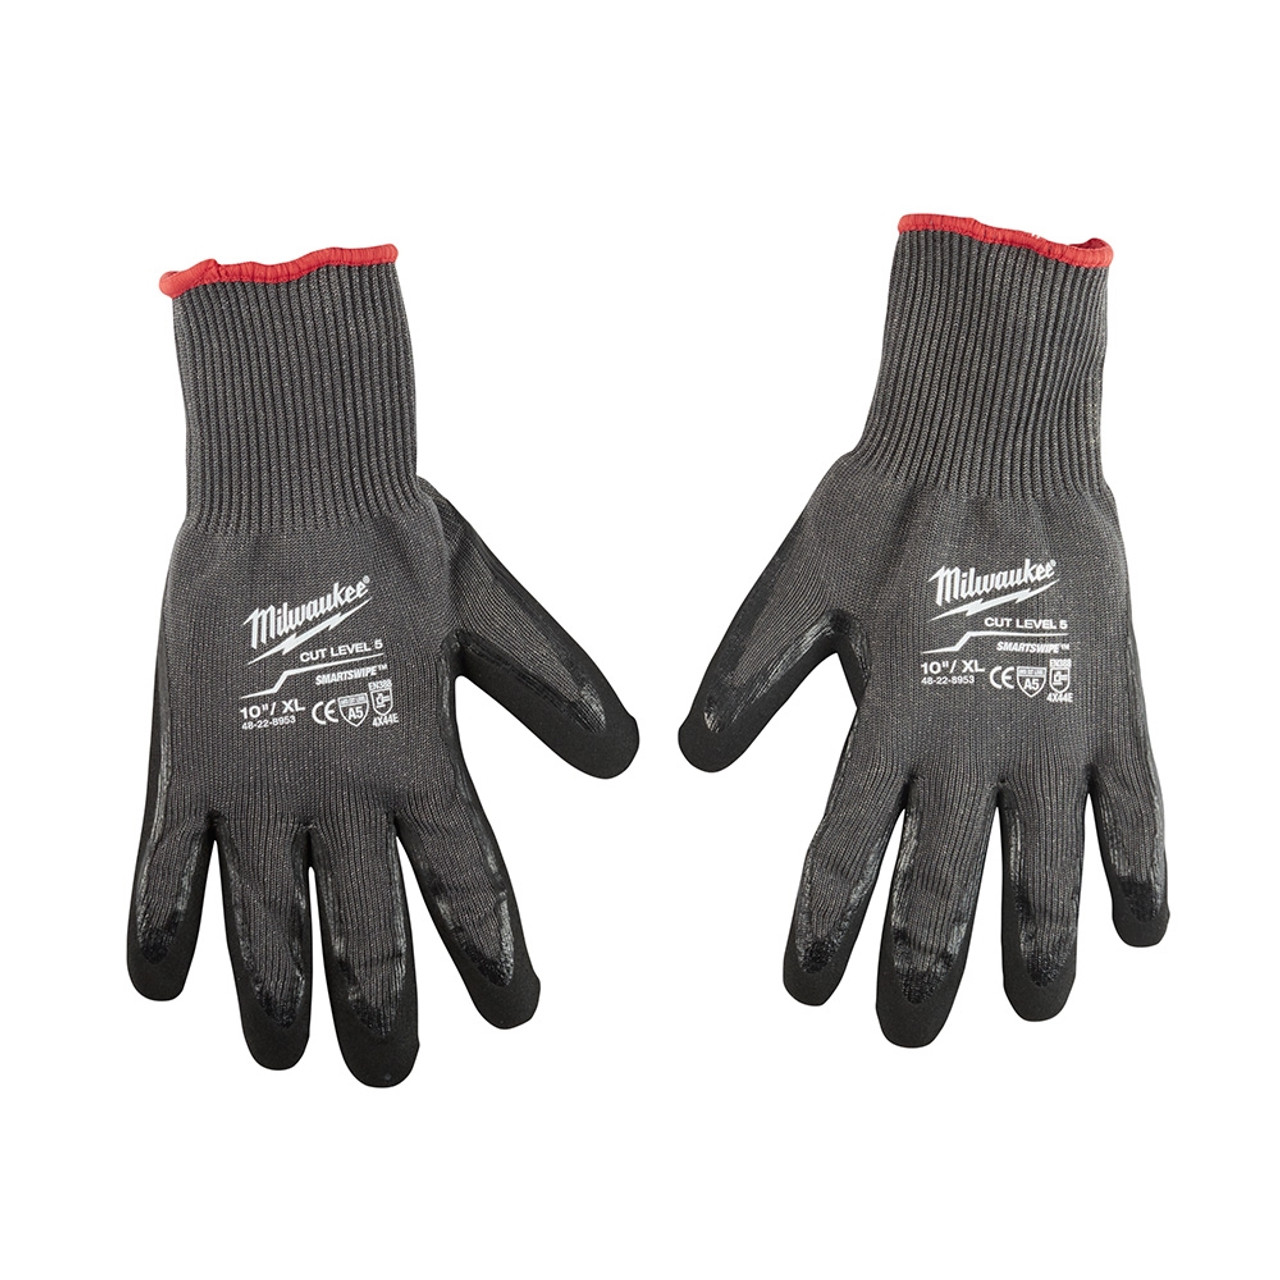 Milwaukee 48-22-8953 Cut Level 5 Dipped Gloves XL